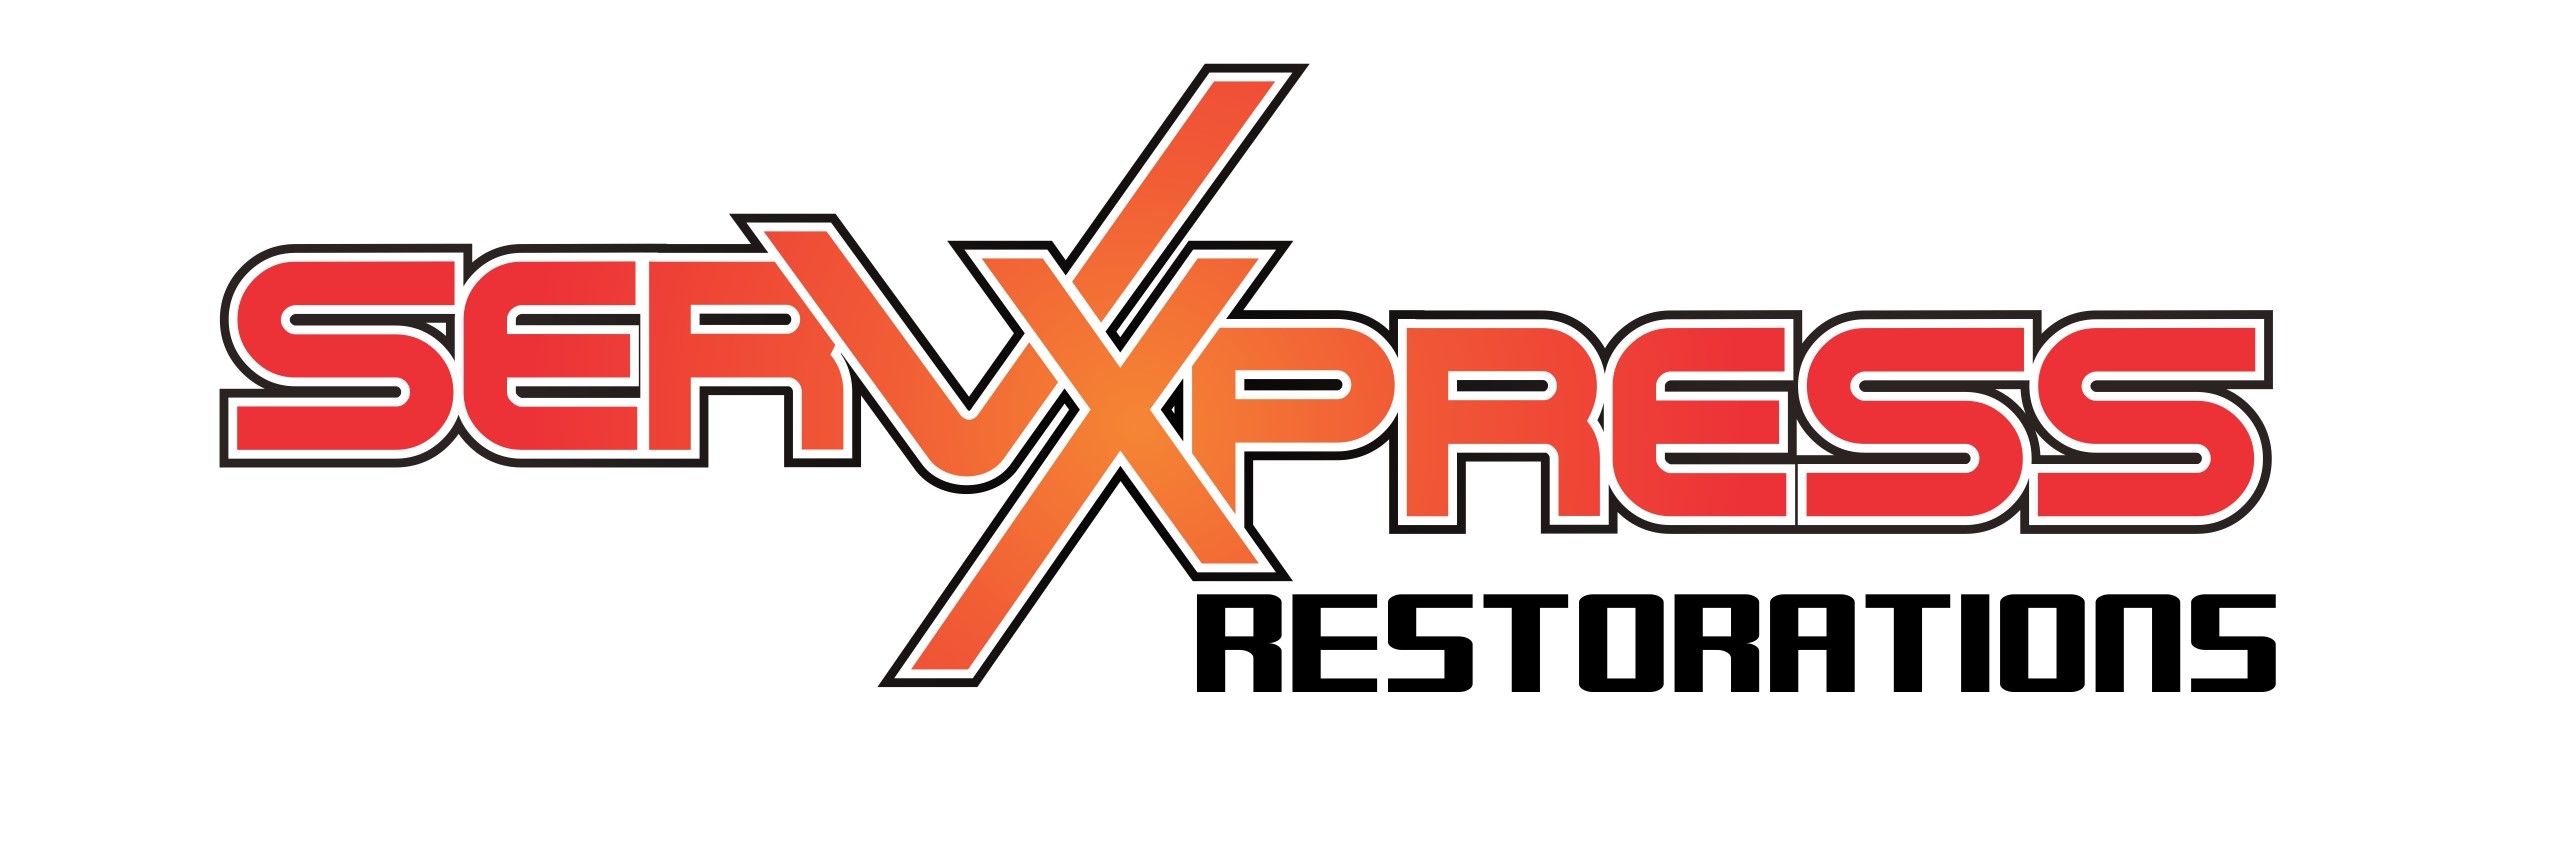 Servxpress Restorations, LLC Logo